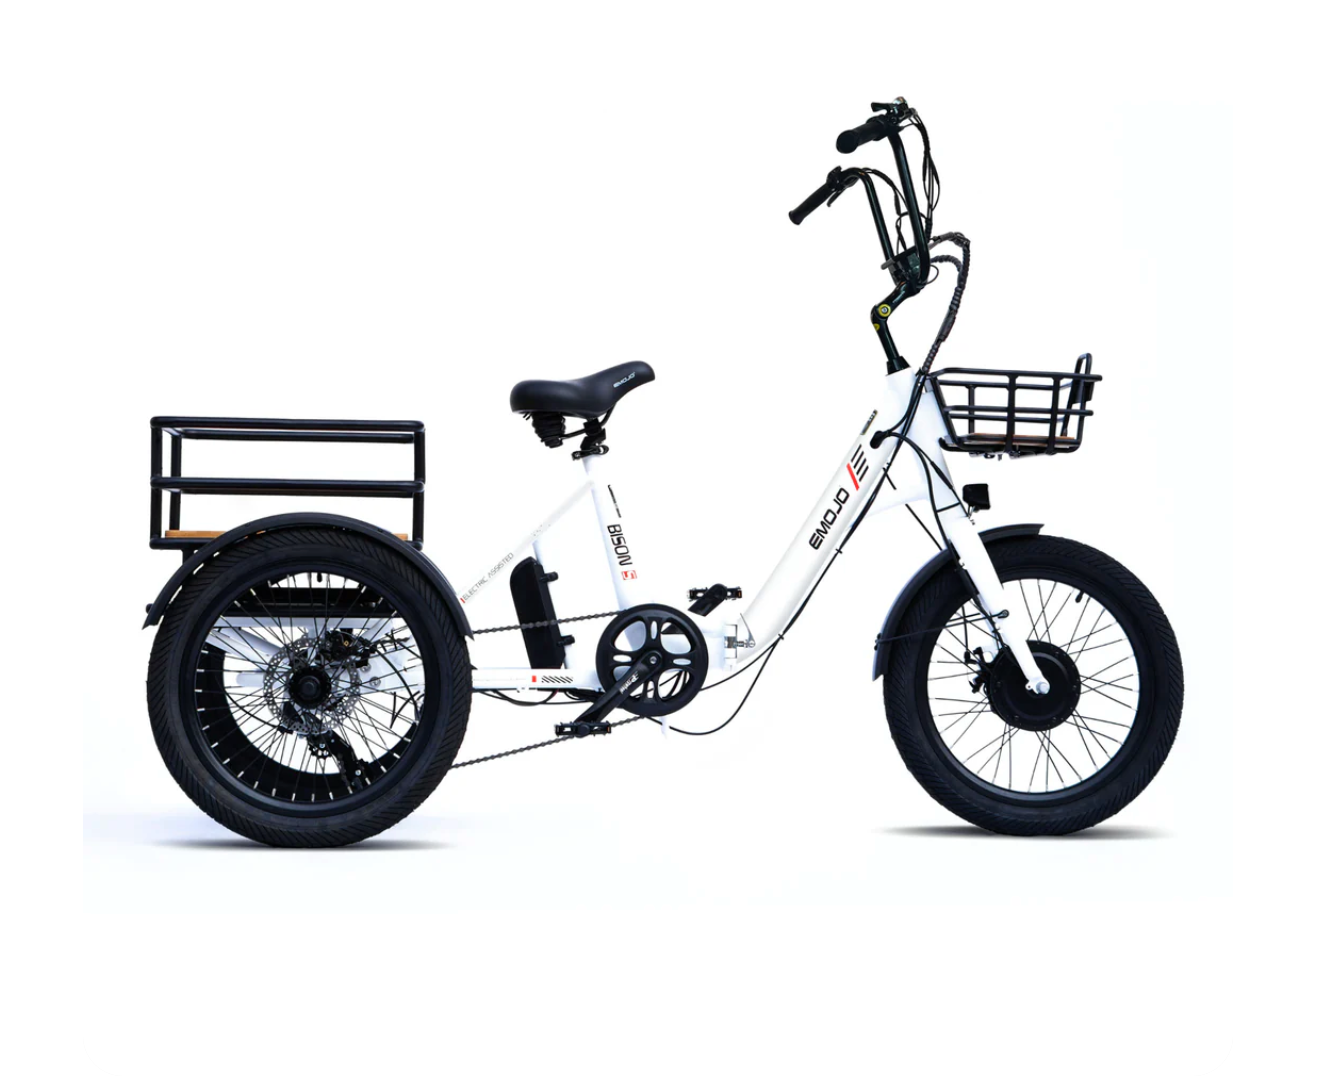 Emojo Bison S Folding Electric Trike Bike